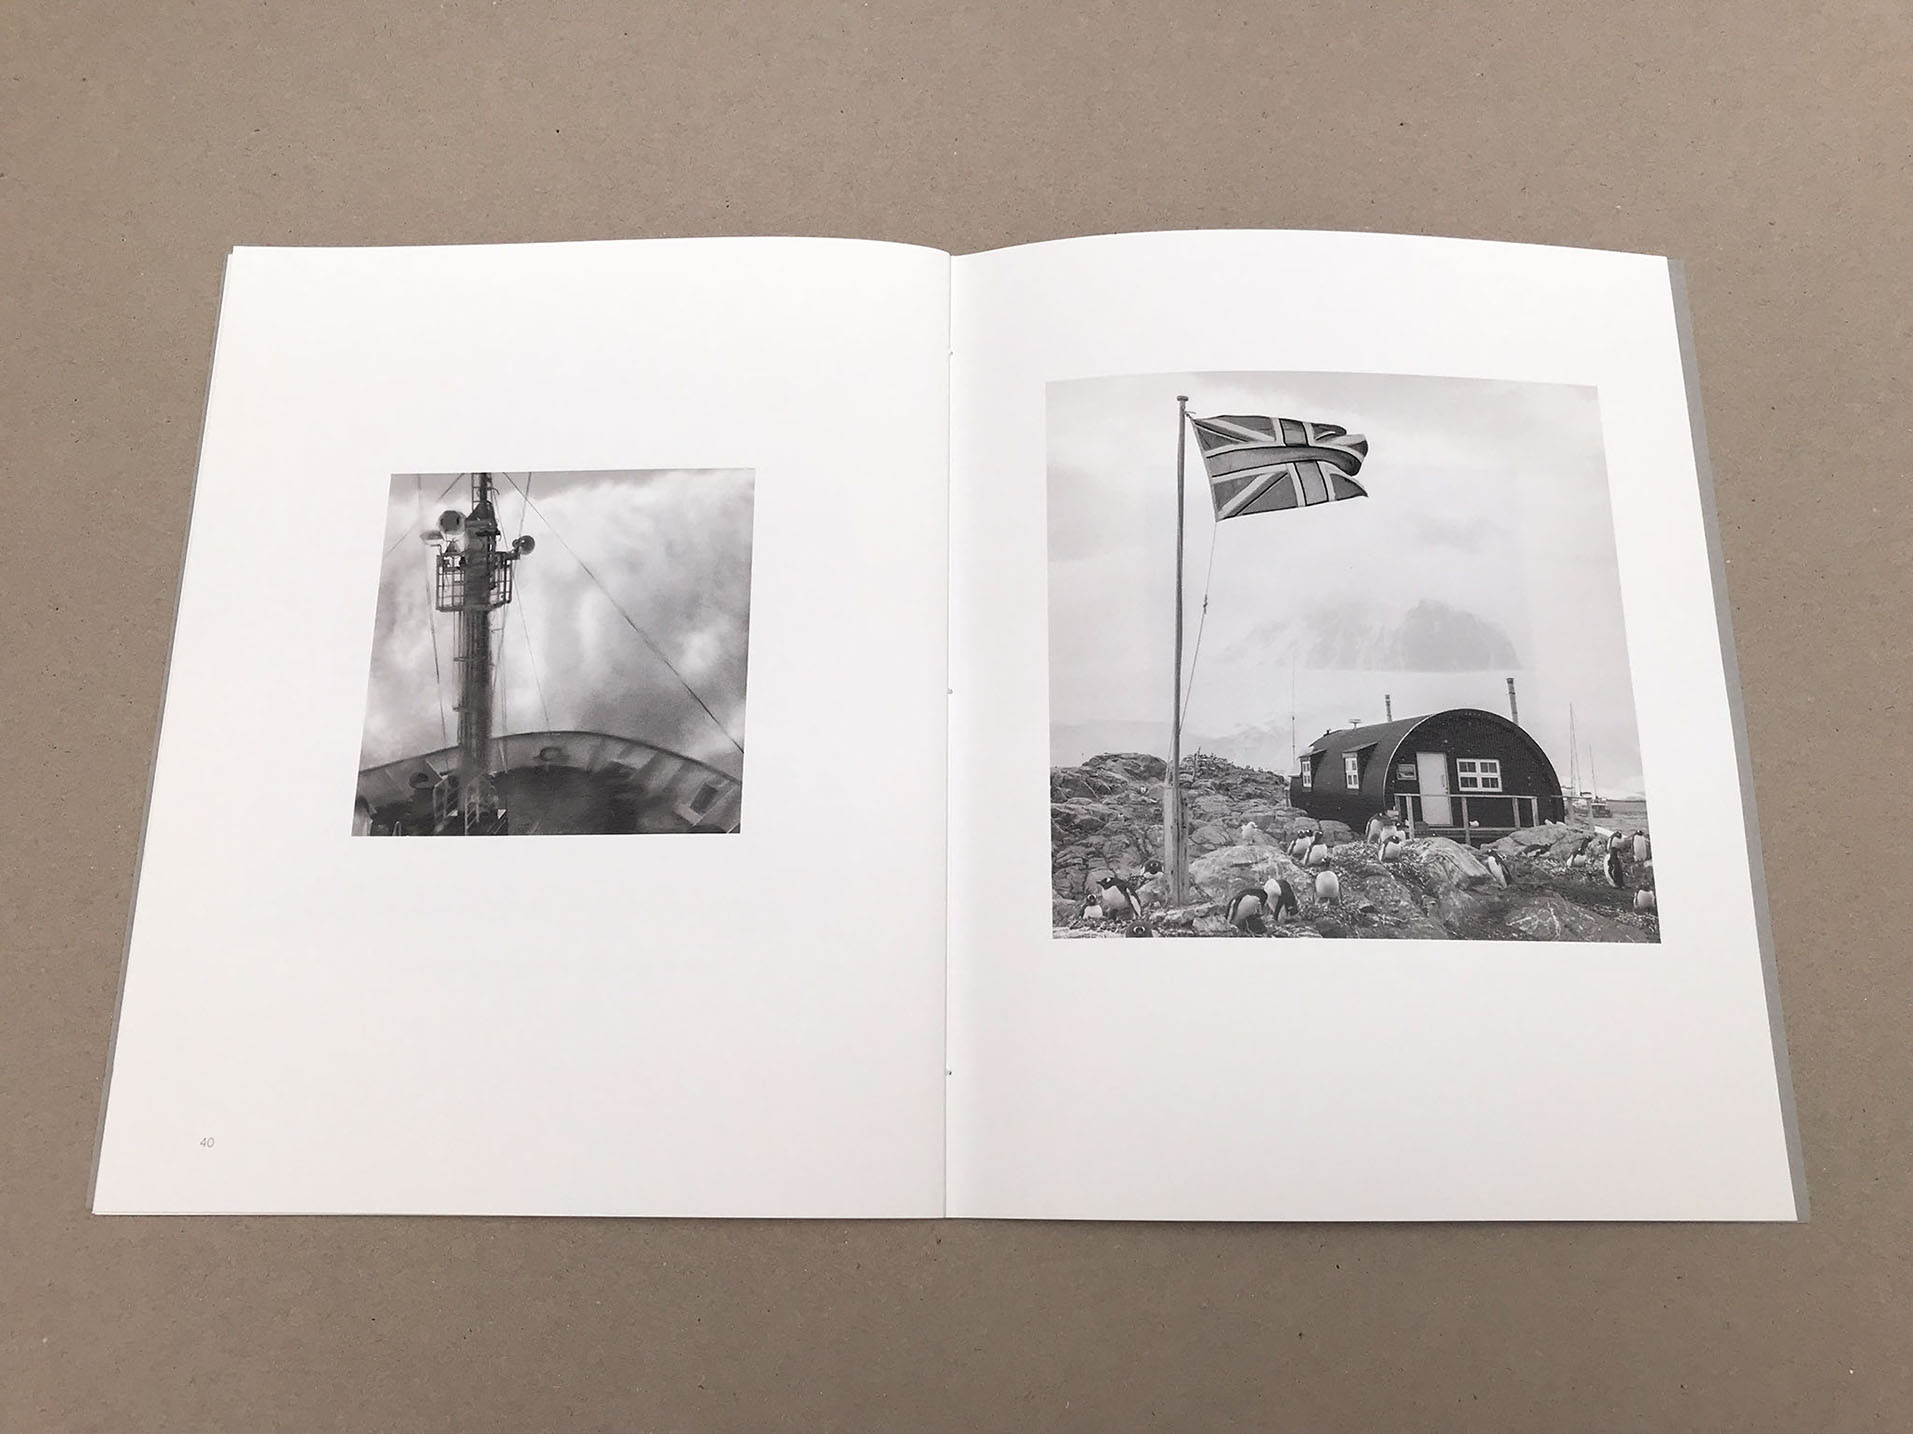 ON ICE - A monochrome photography book by Patrick Kaye